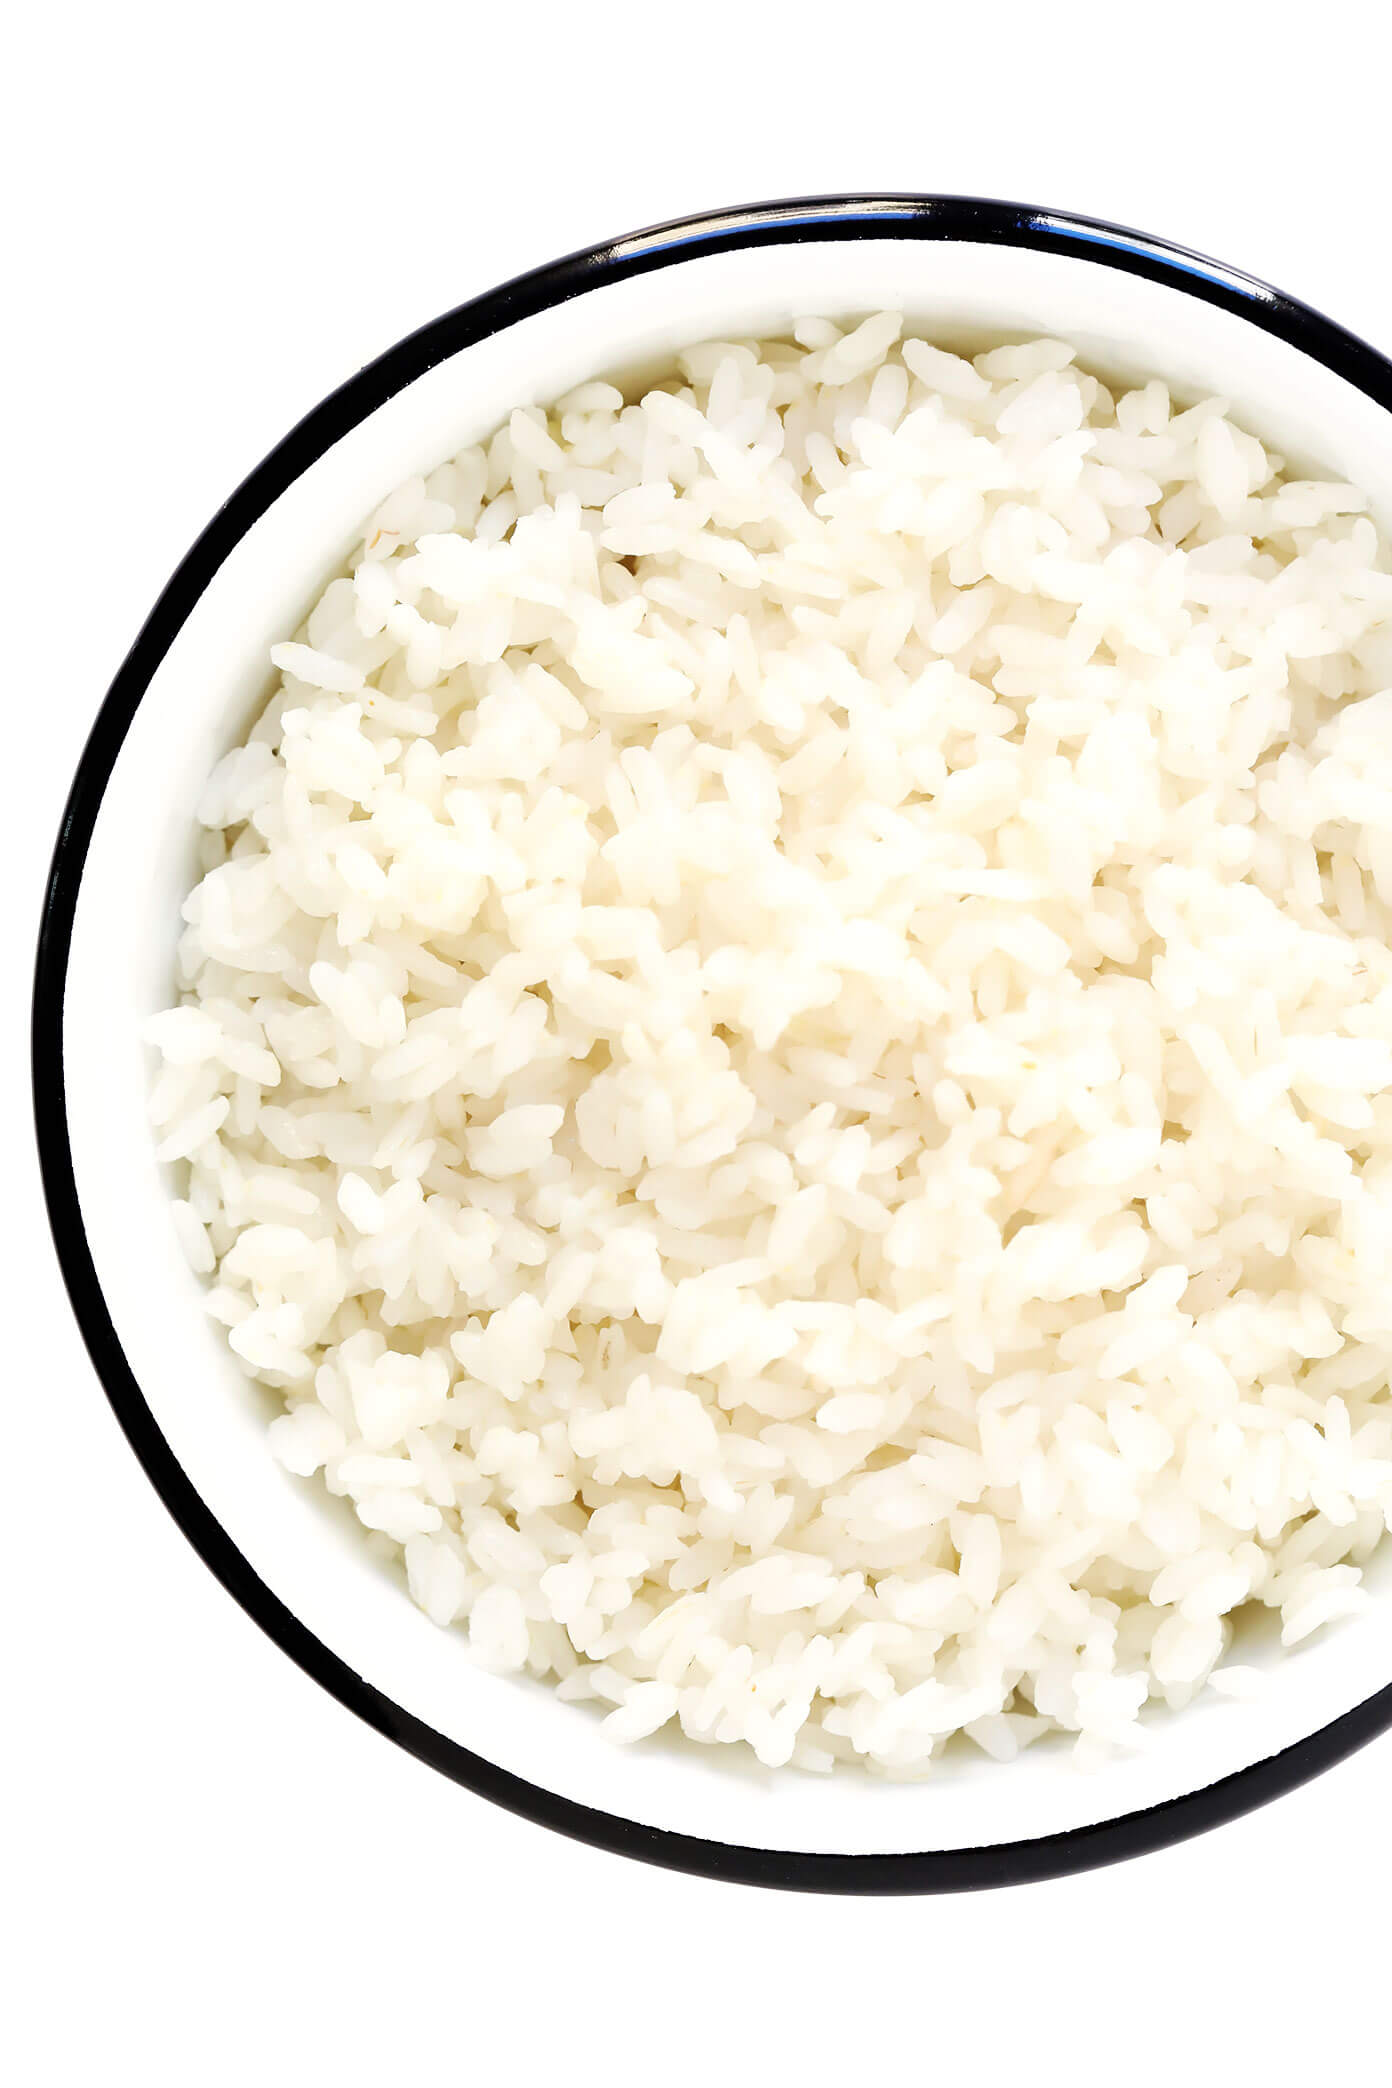 https://www.gimmesomeoven.com/wp-content/uploads/2020/05/How-To-Make-Sushi-Rice-Recipe-8.jpg